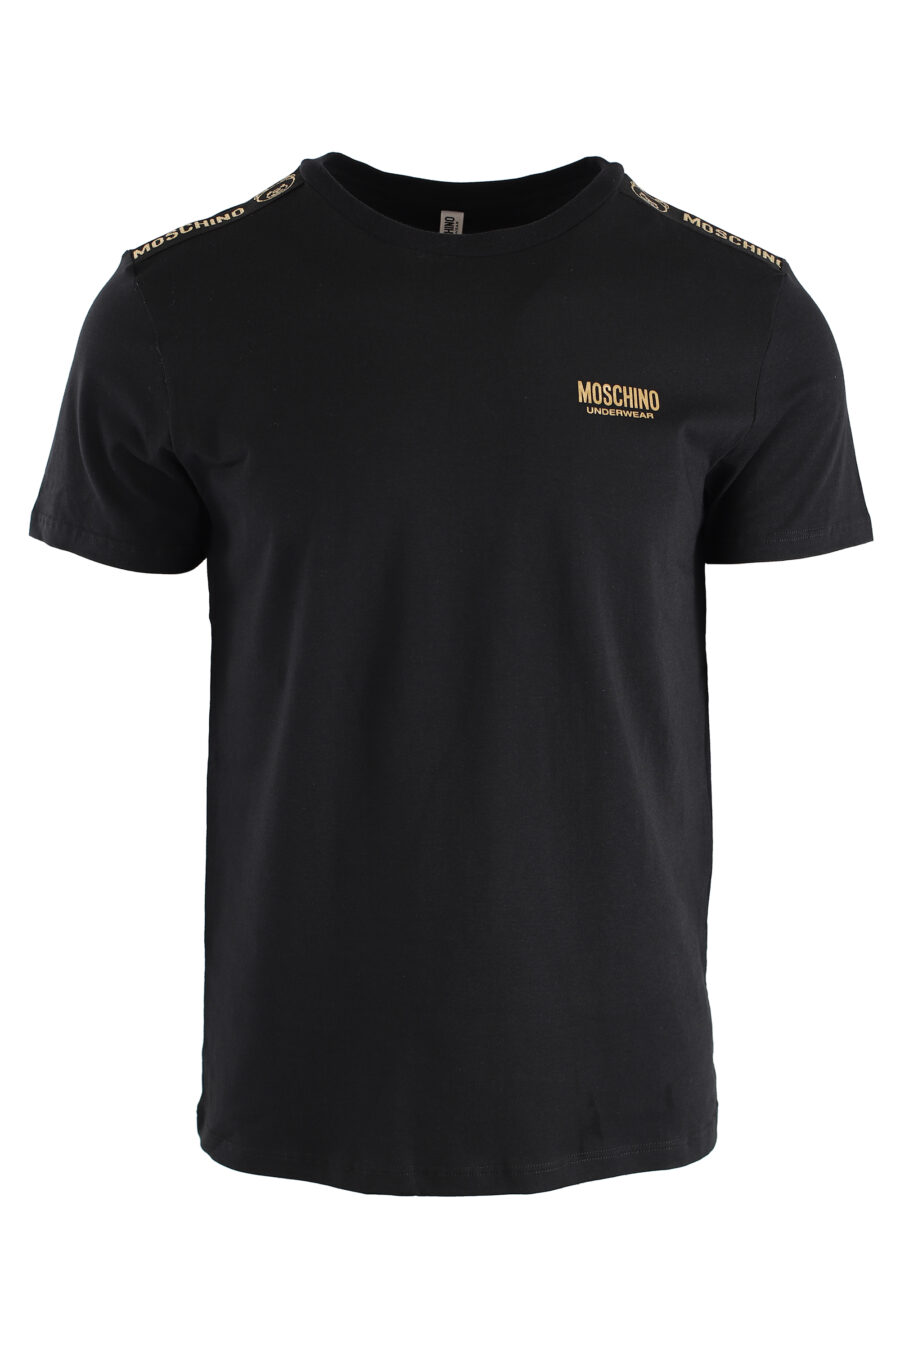 Schwarzes T-Shirt und Boxer-Set mit goldenem Mini-Logo - IMG 7604